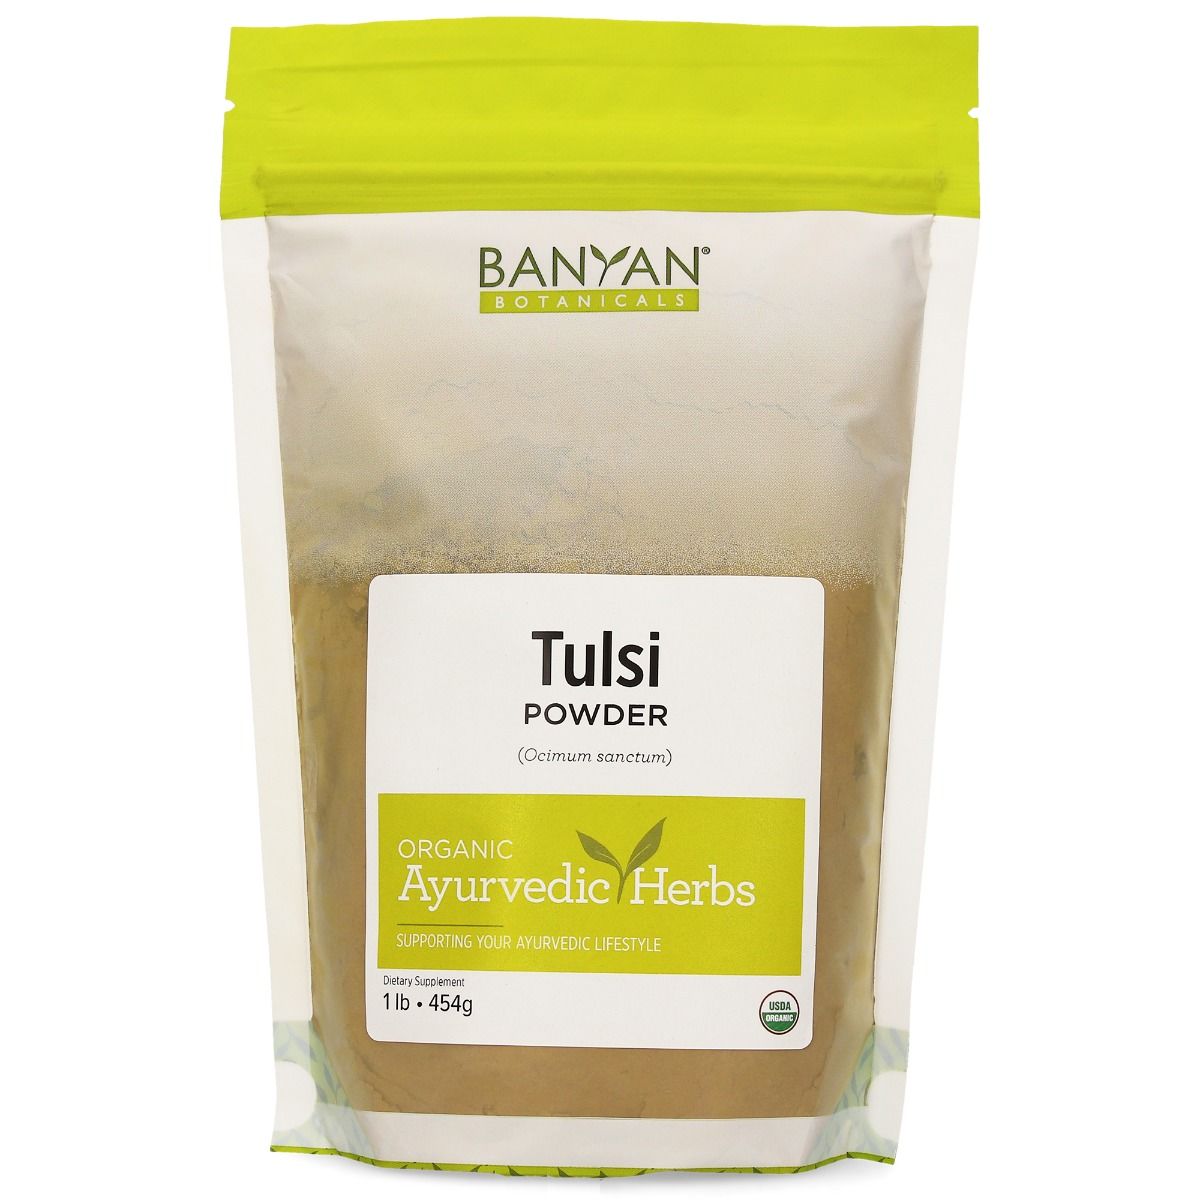 Tulsi powder 454g Organic Certified